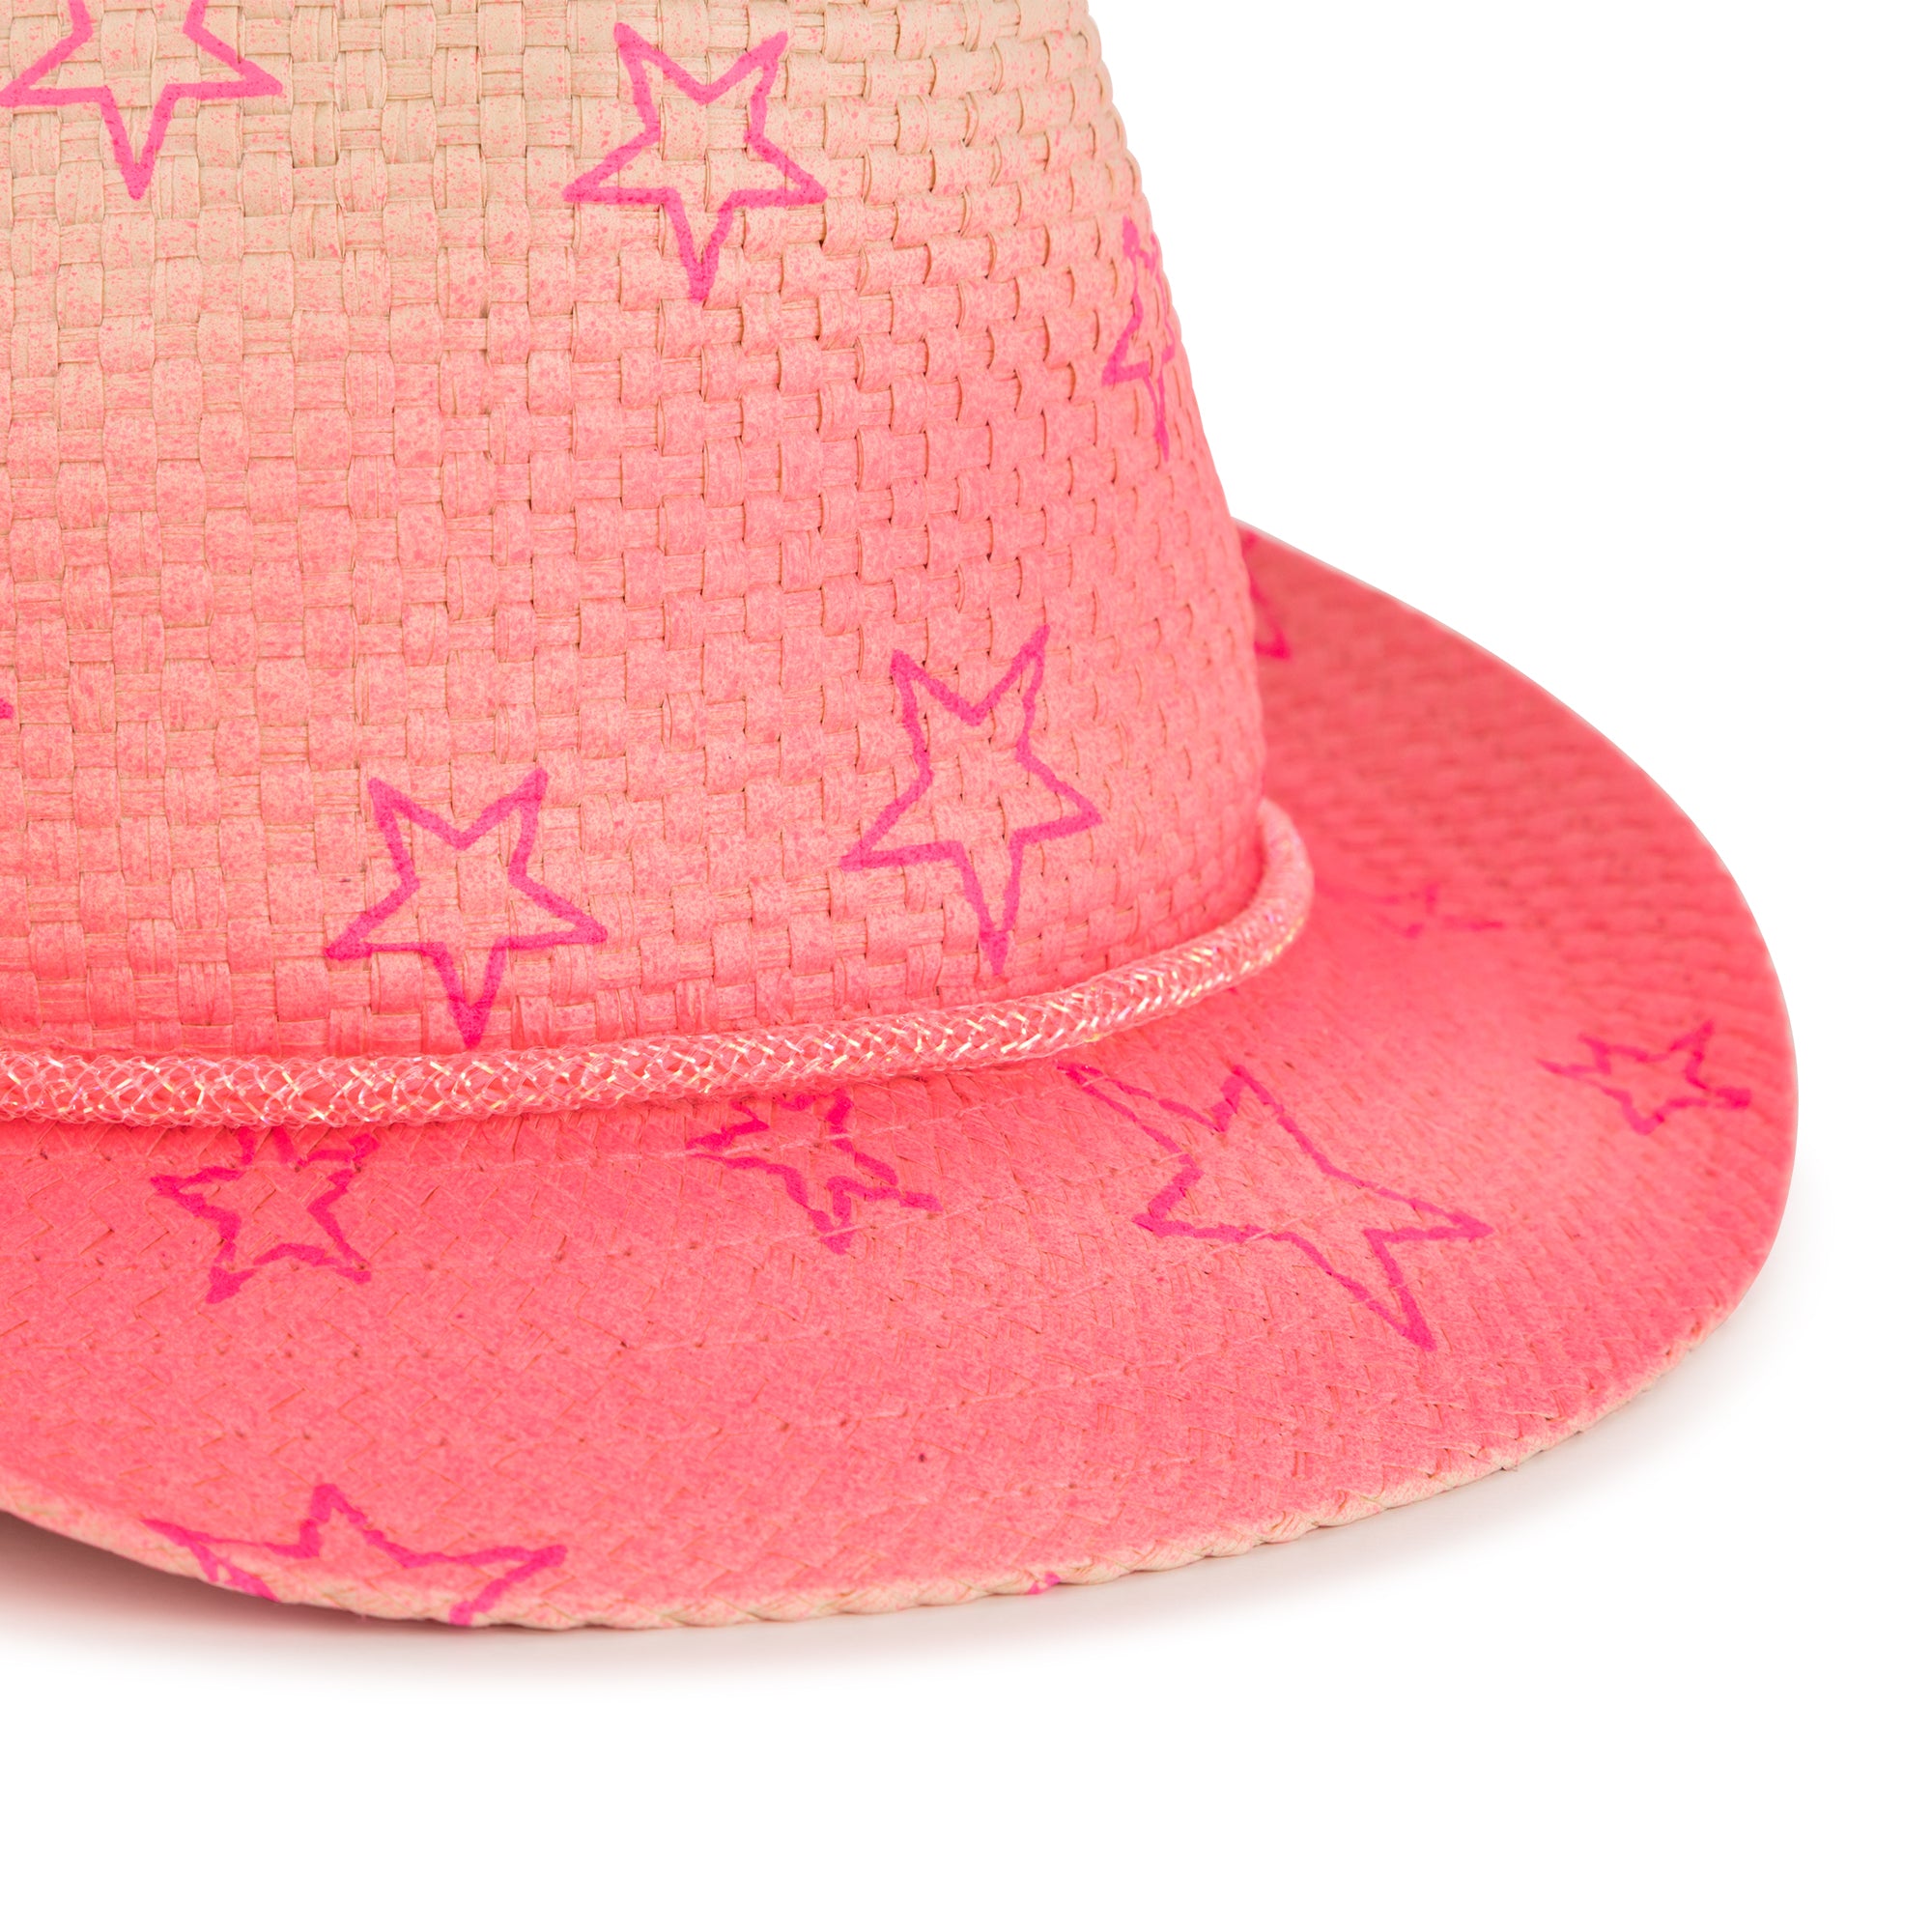 Boys & Girls Gradient Pink Hat